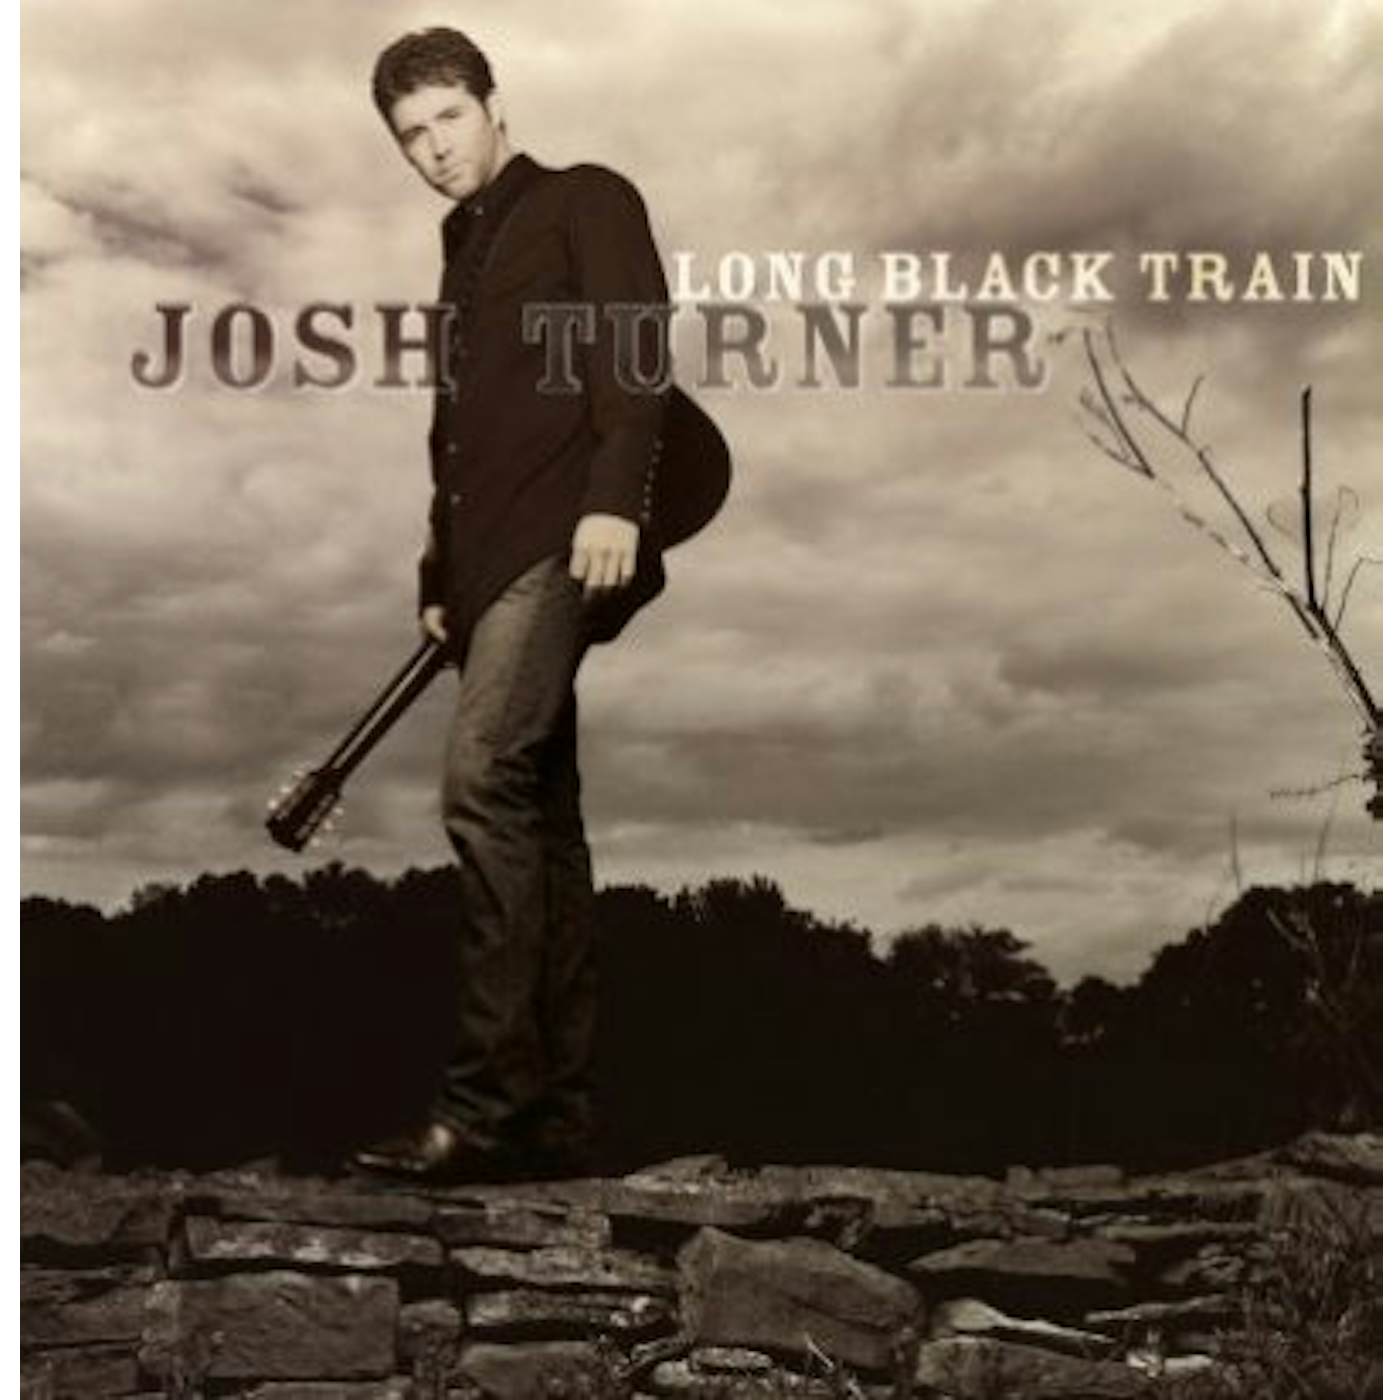 Josh Turner Long Black Train CD